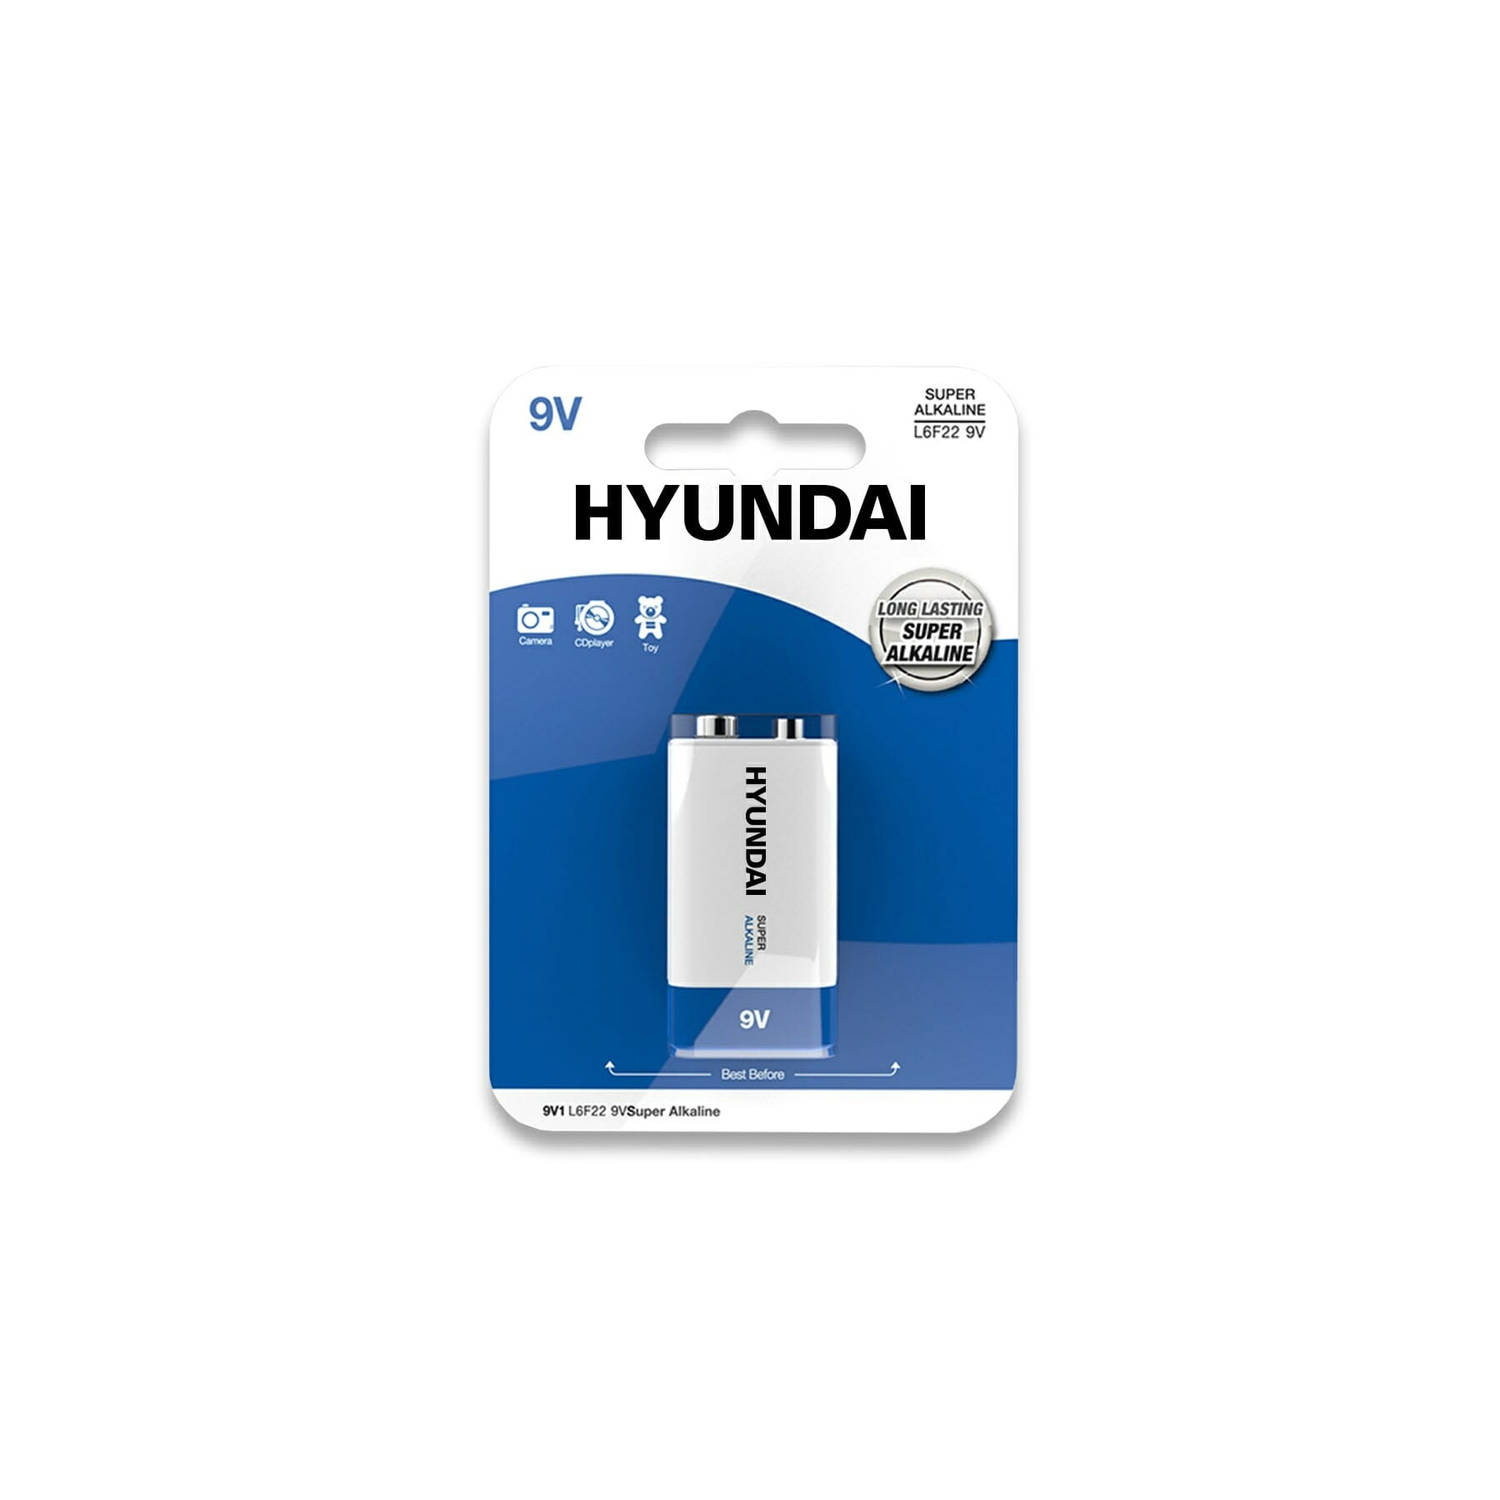 Hyundai Batteries - Super Alkaline 9V batterijen